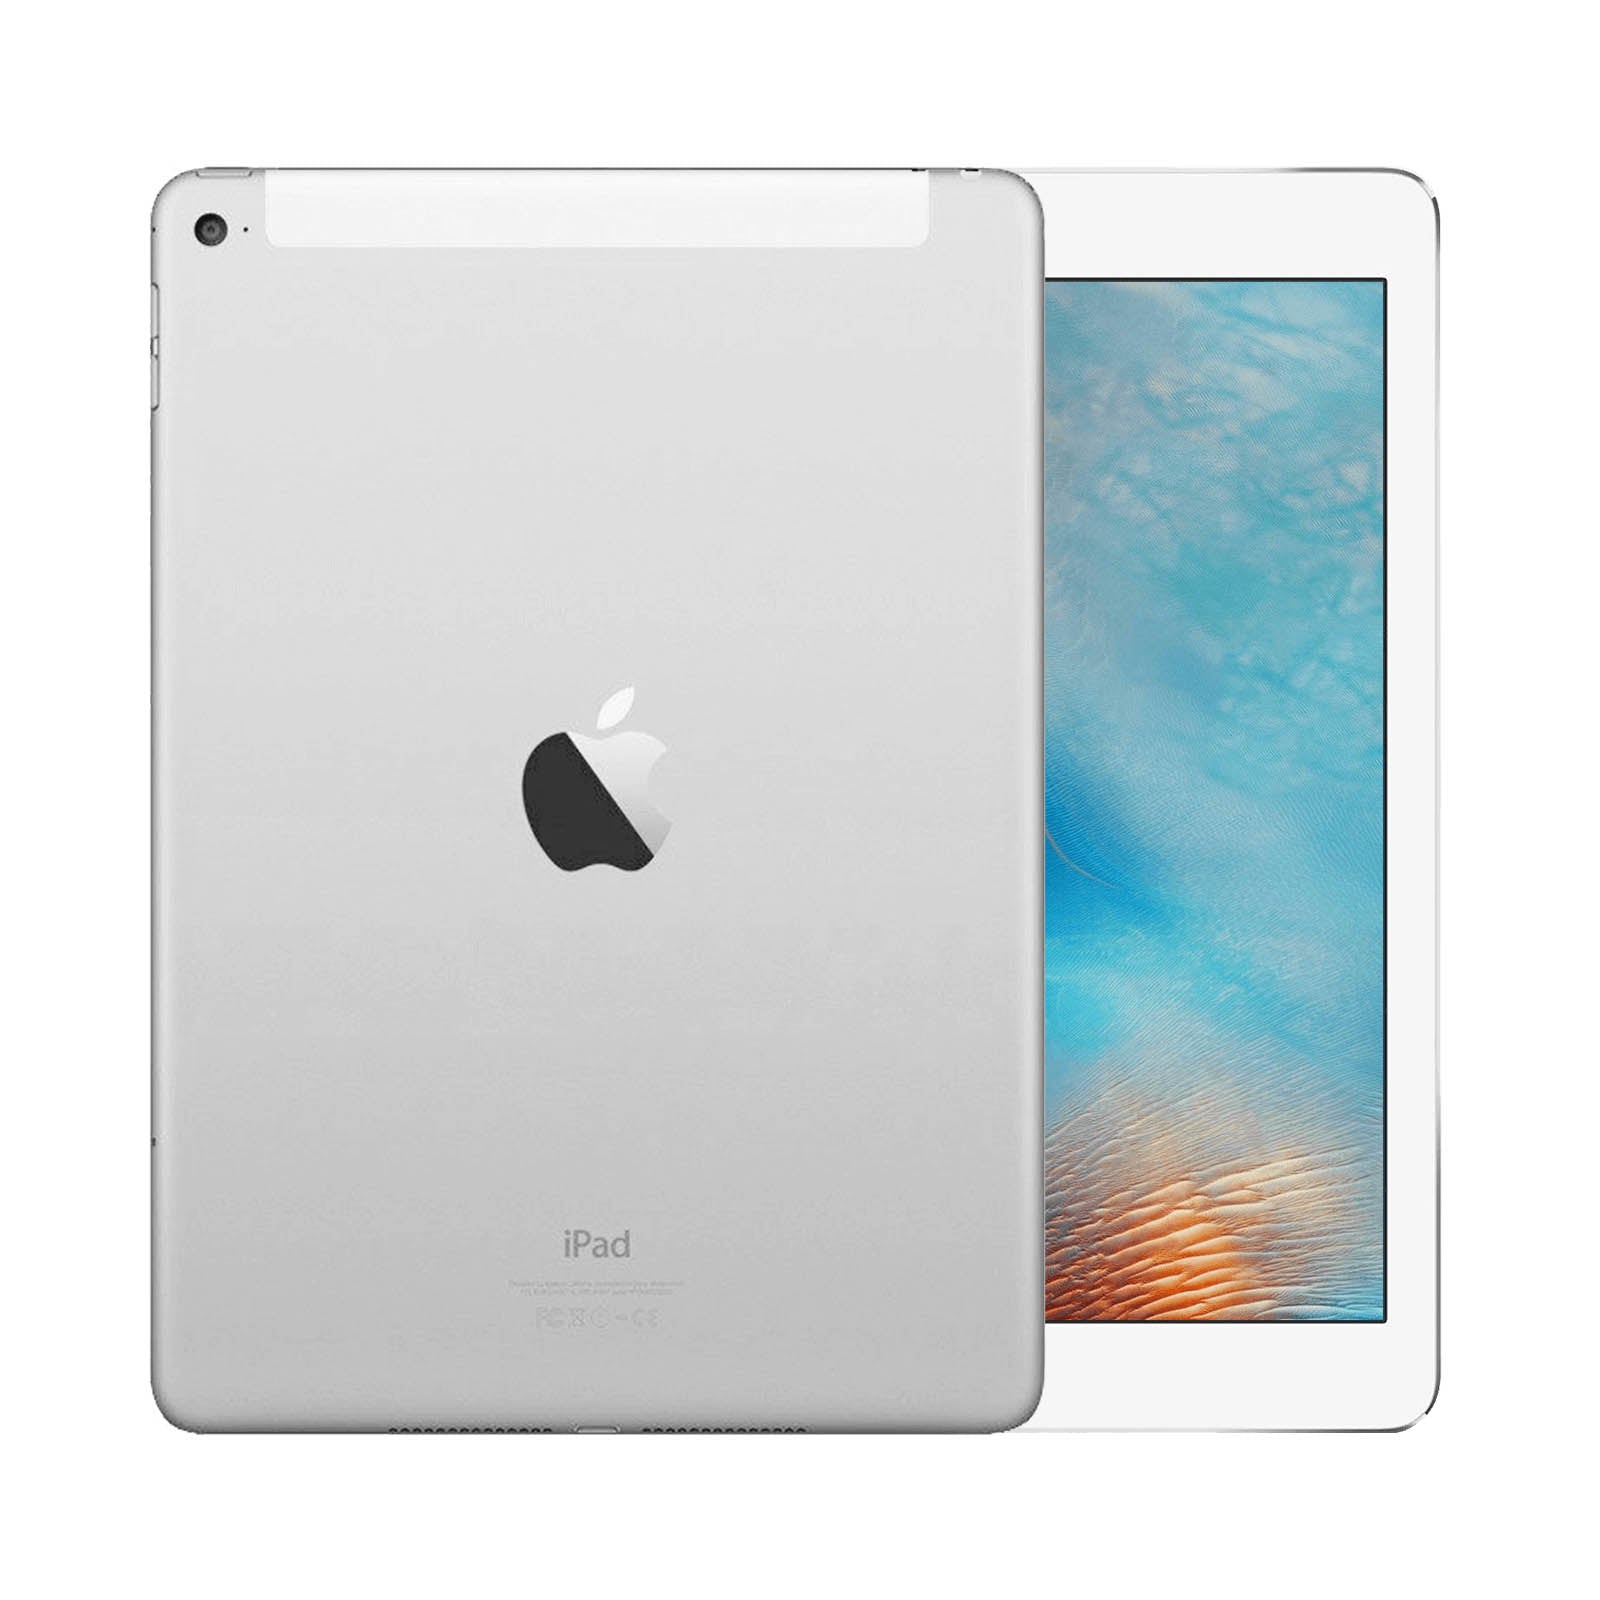 Apple iPad Air 2 32GB Silver Very Good Cellular - Unlocked